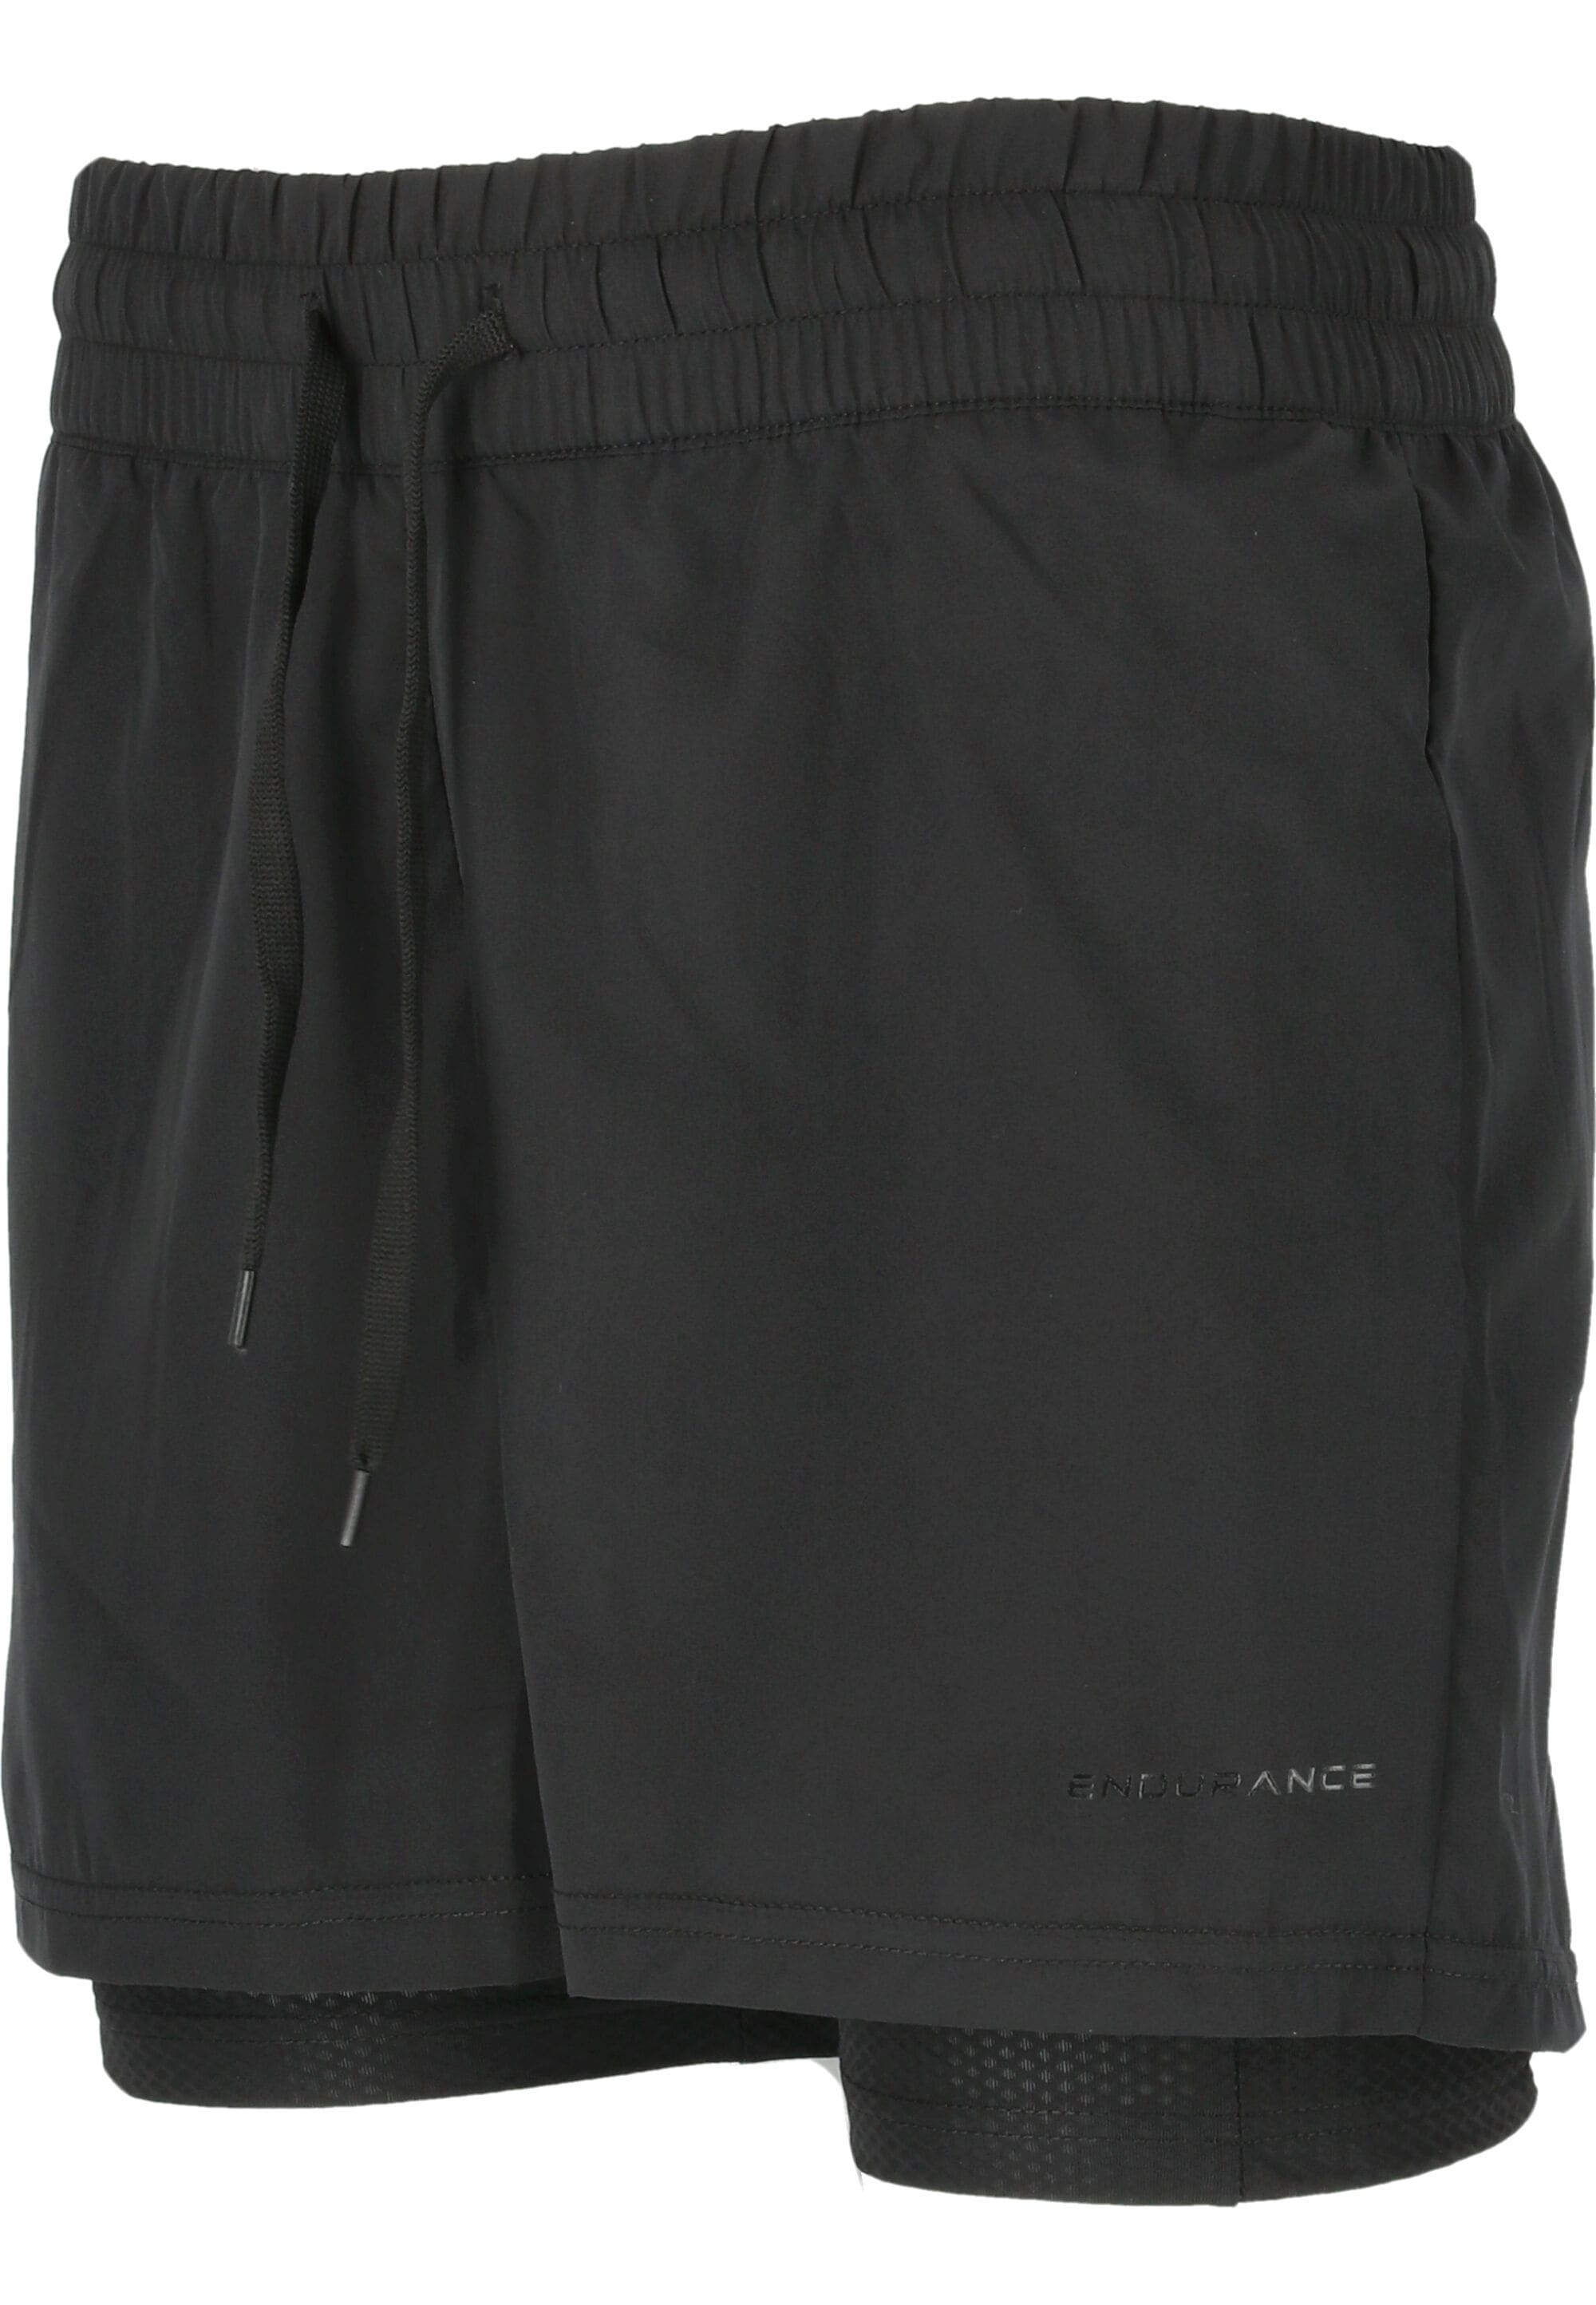 ENDURANCE Shorts »Ingelily«, aus schnelltrocknendem Material kaufen | I\'m  walking | Trainingshosen